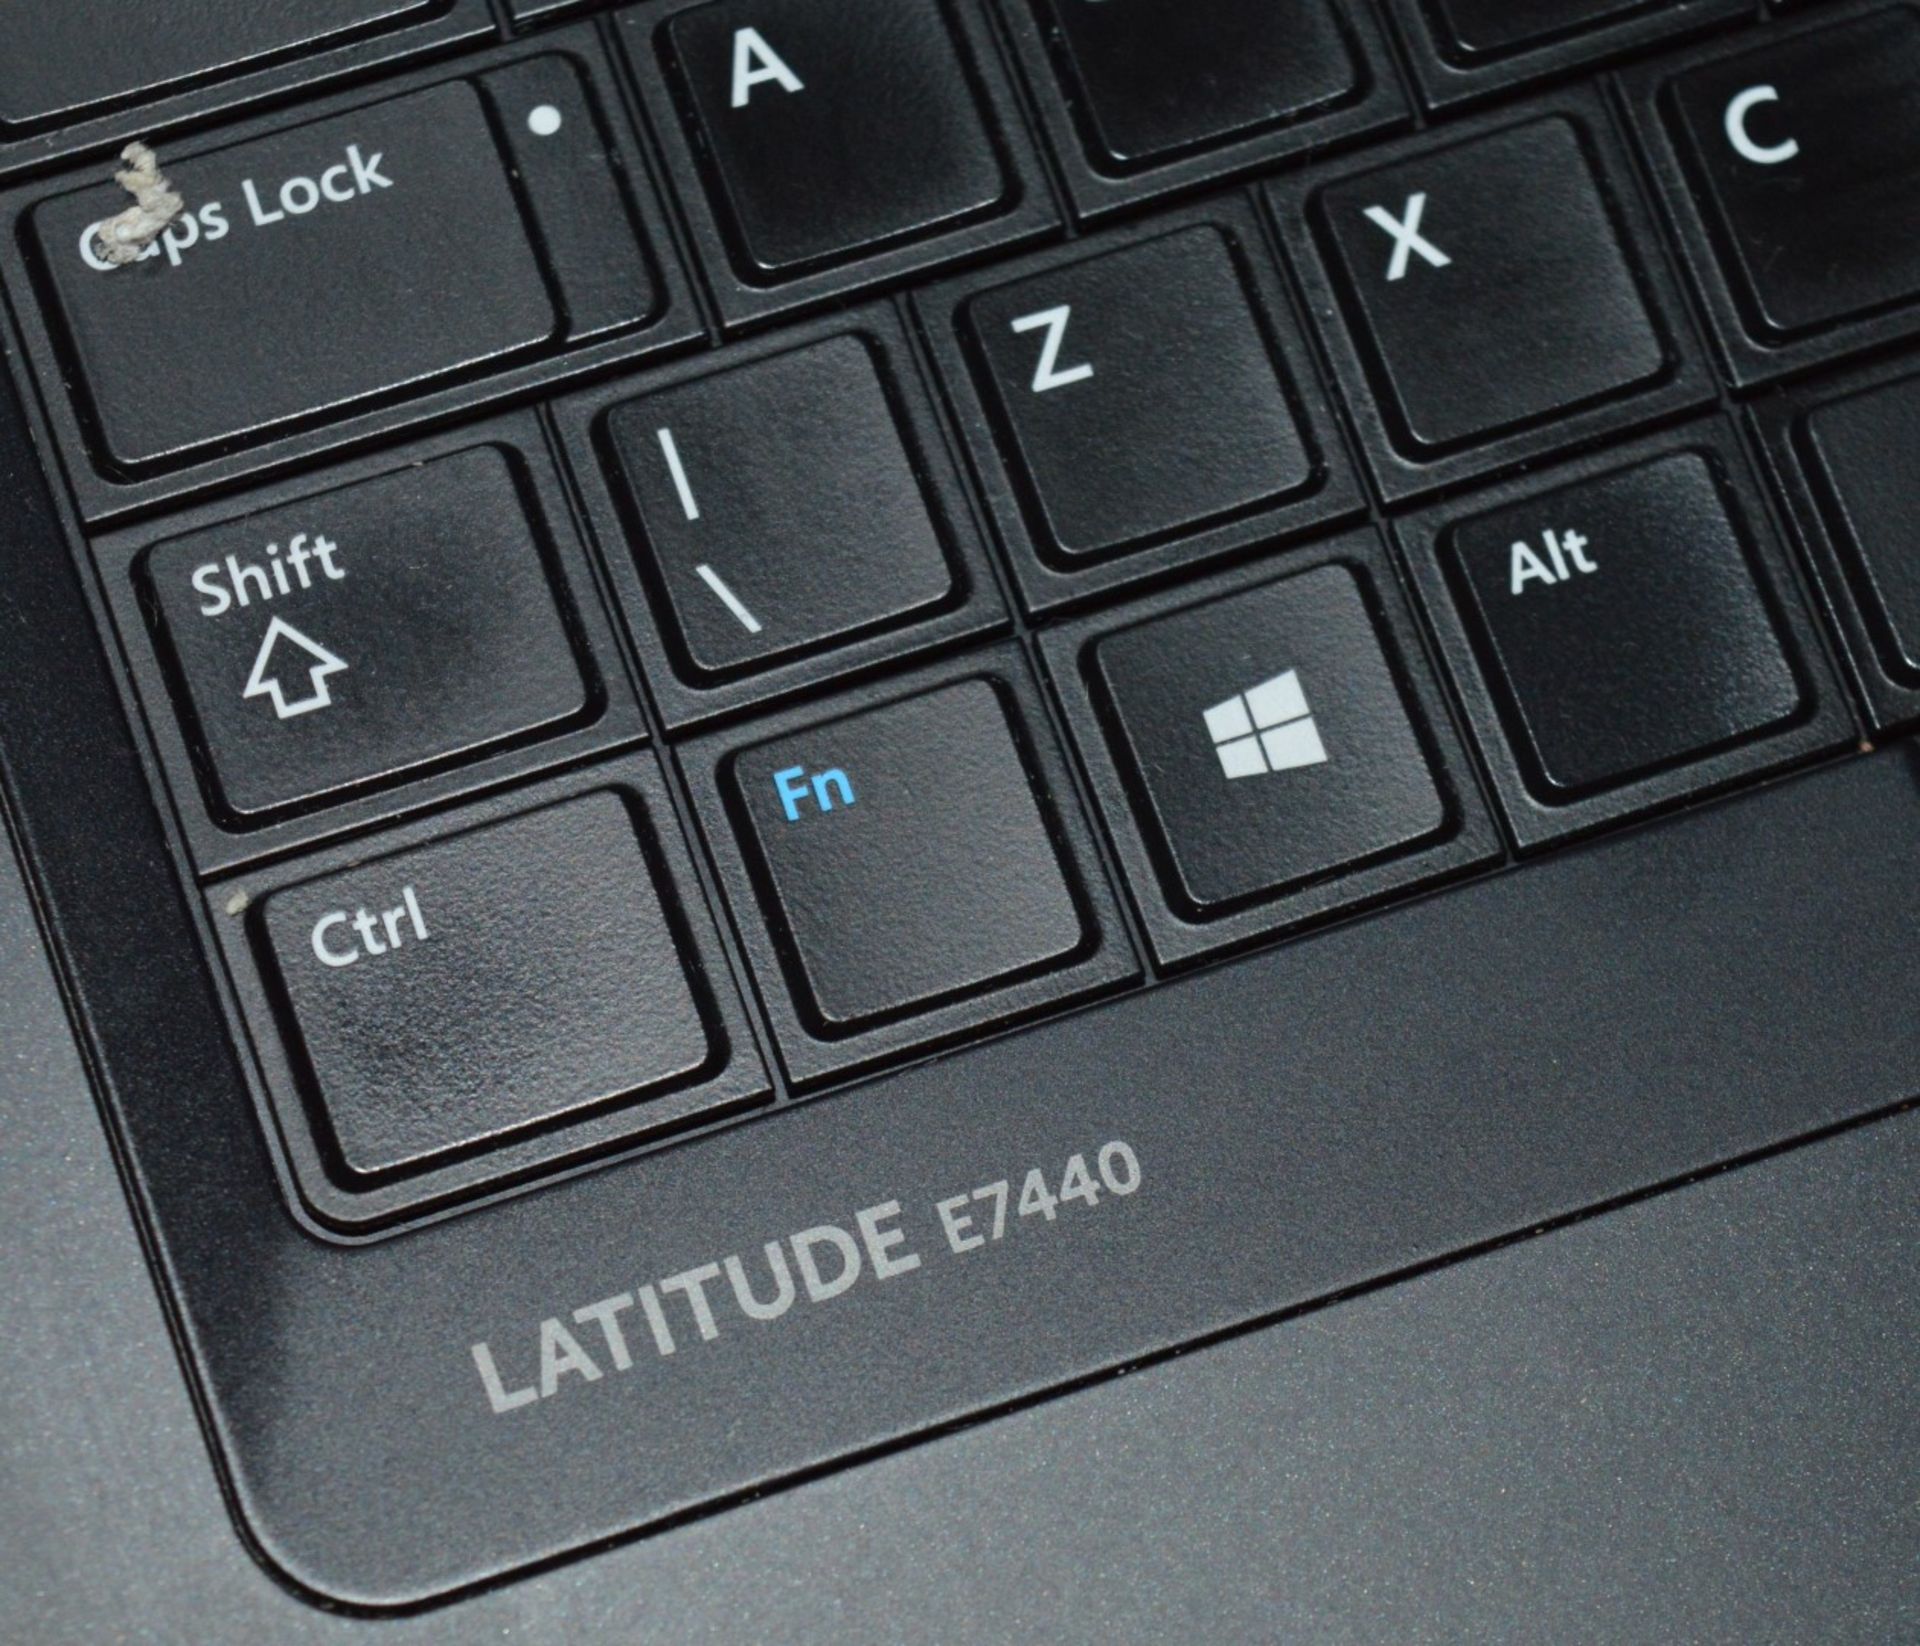 1 x Dell Latitude E7440 Laptop Computer - 14 Inch Screen - Features Intel Core i5-4310U 2.6ghz - Image 4 of 9